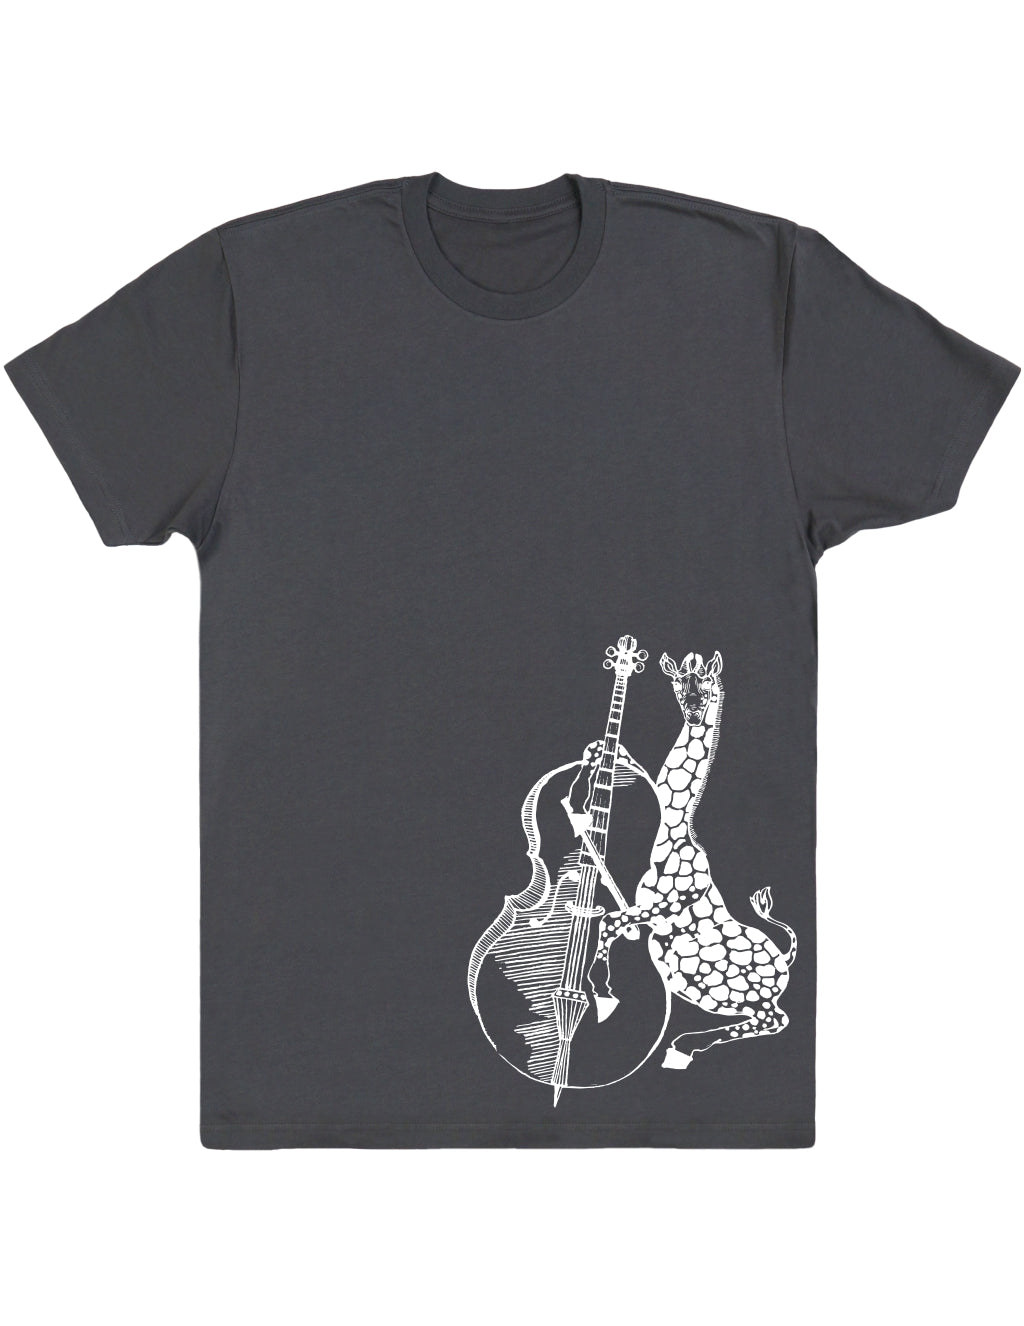 seembo-asphalt-t-shirt-with-giraffe-playing-cello-cellist-art-on-it